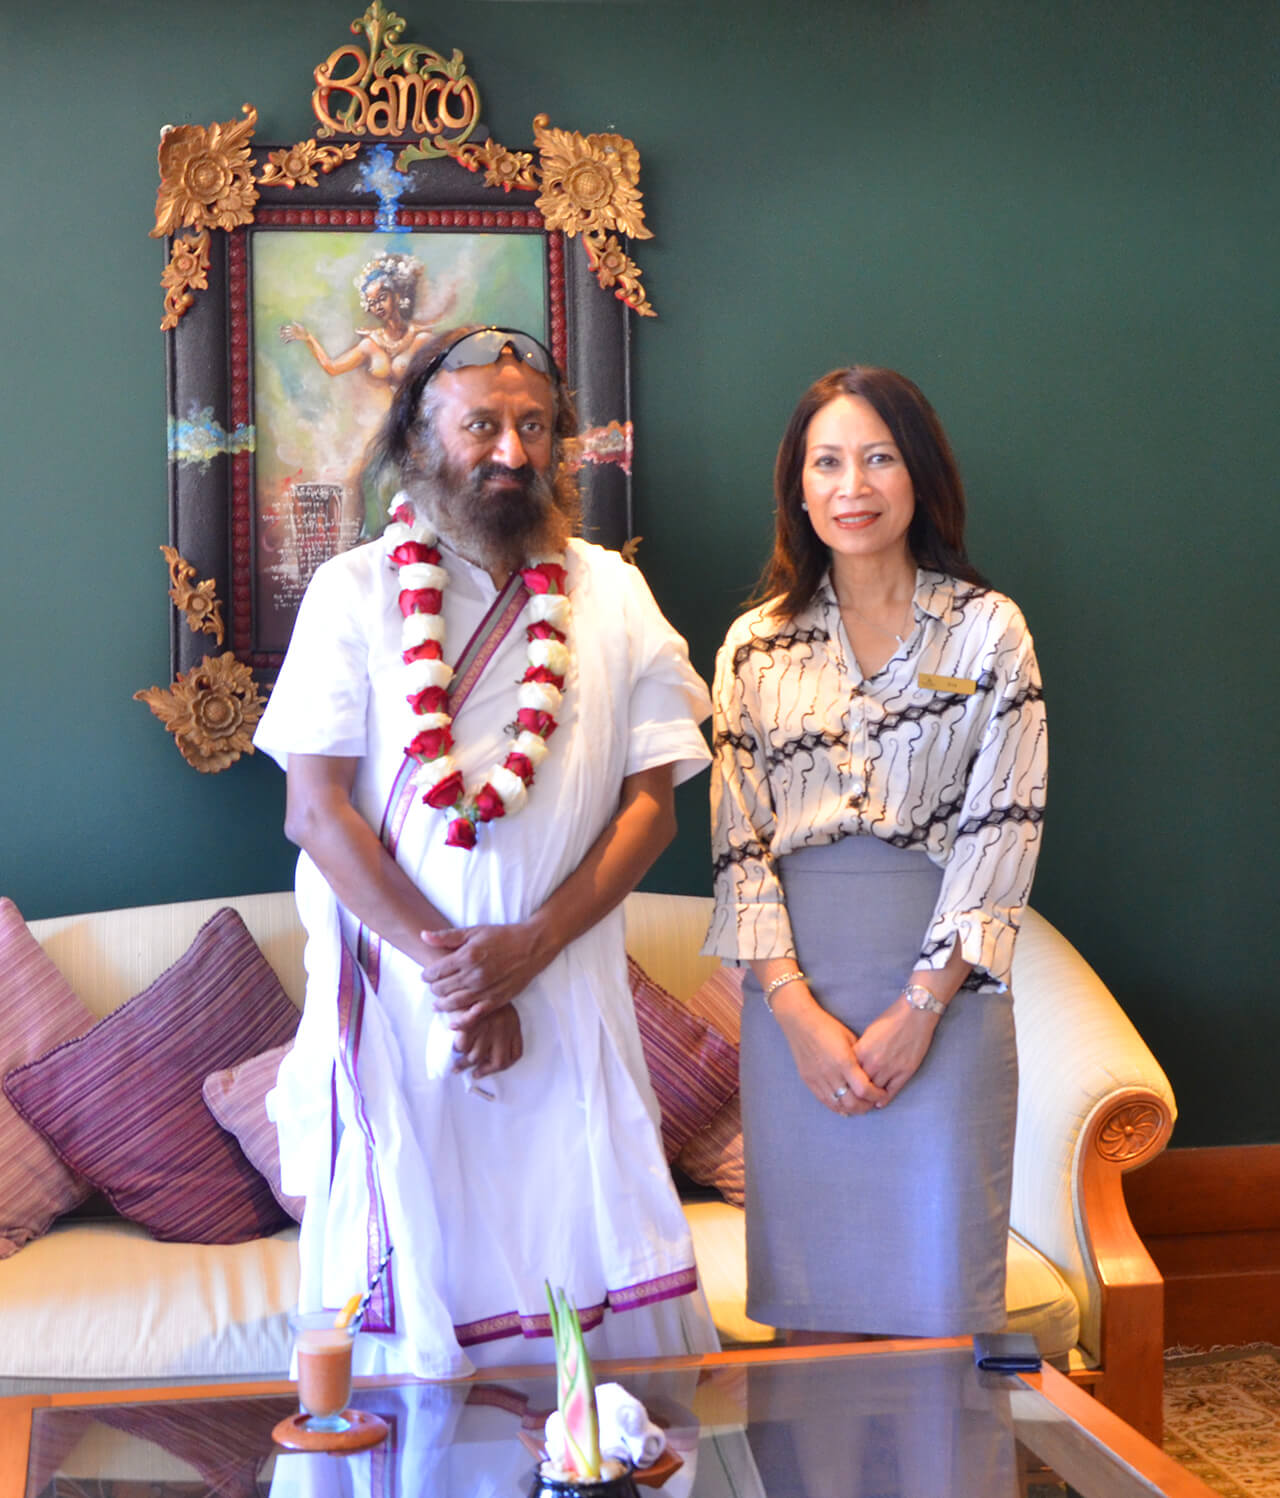 Nusa Dua Beach Hotel & Spa welcomed Spiritual Leader, His Holiness